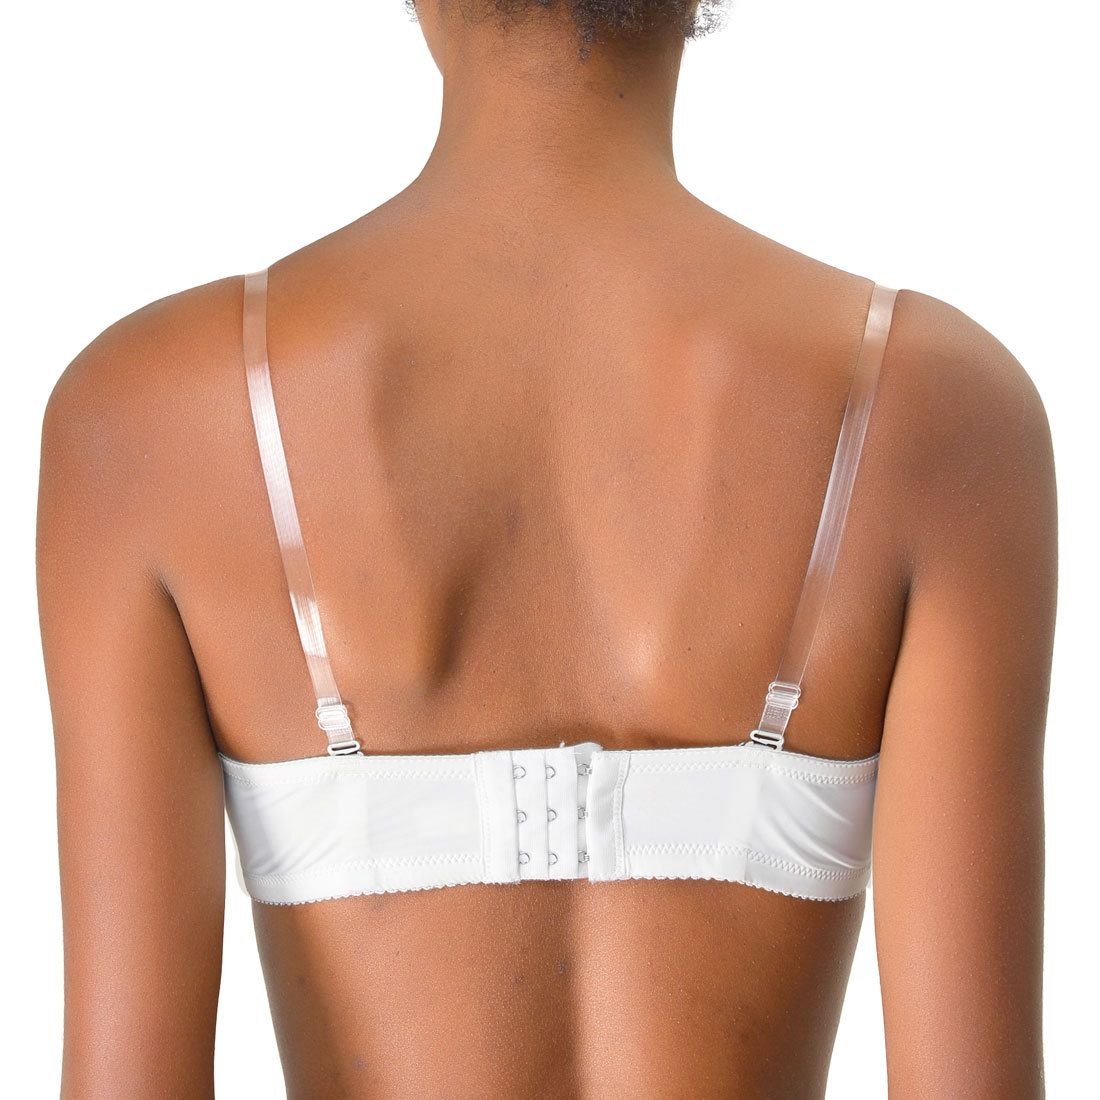 Women, 2 pack. Adjustable clear bra straps